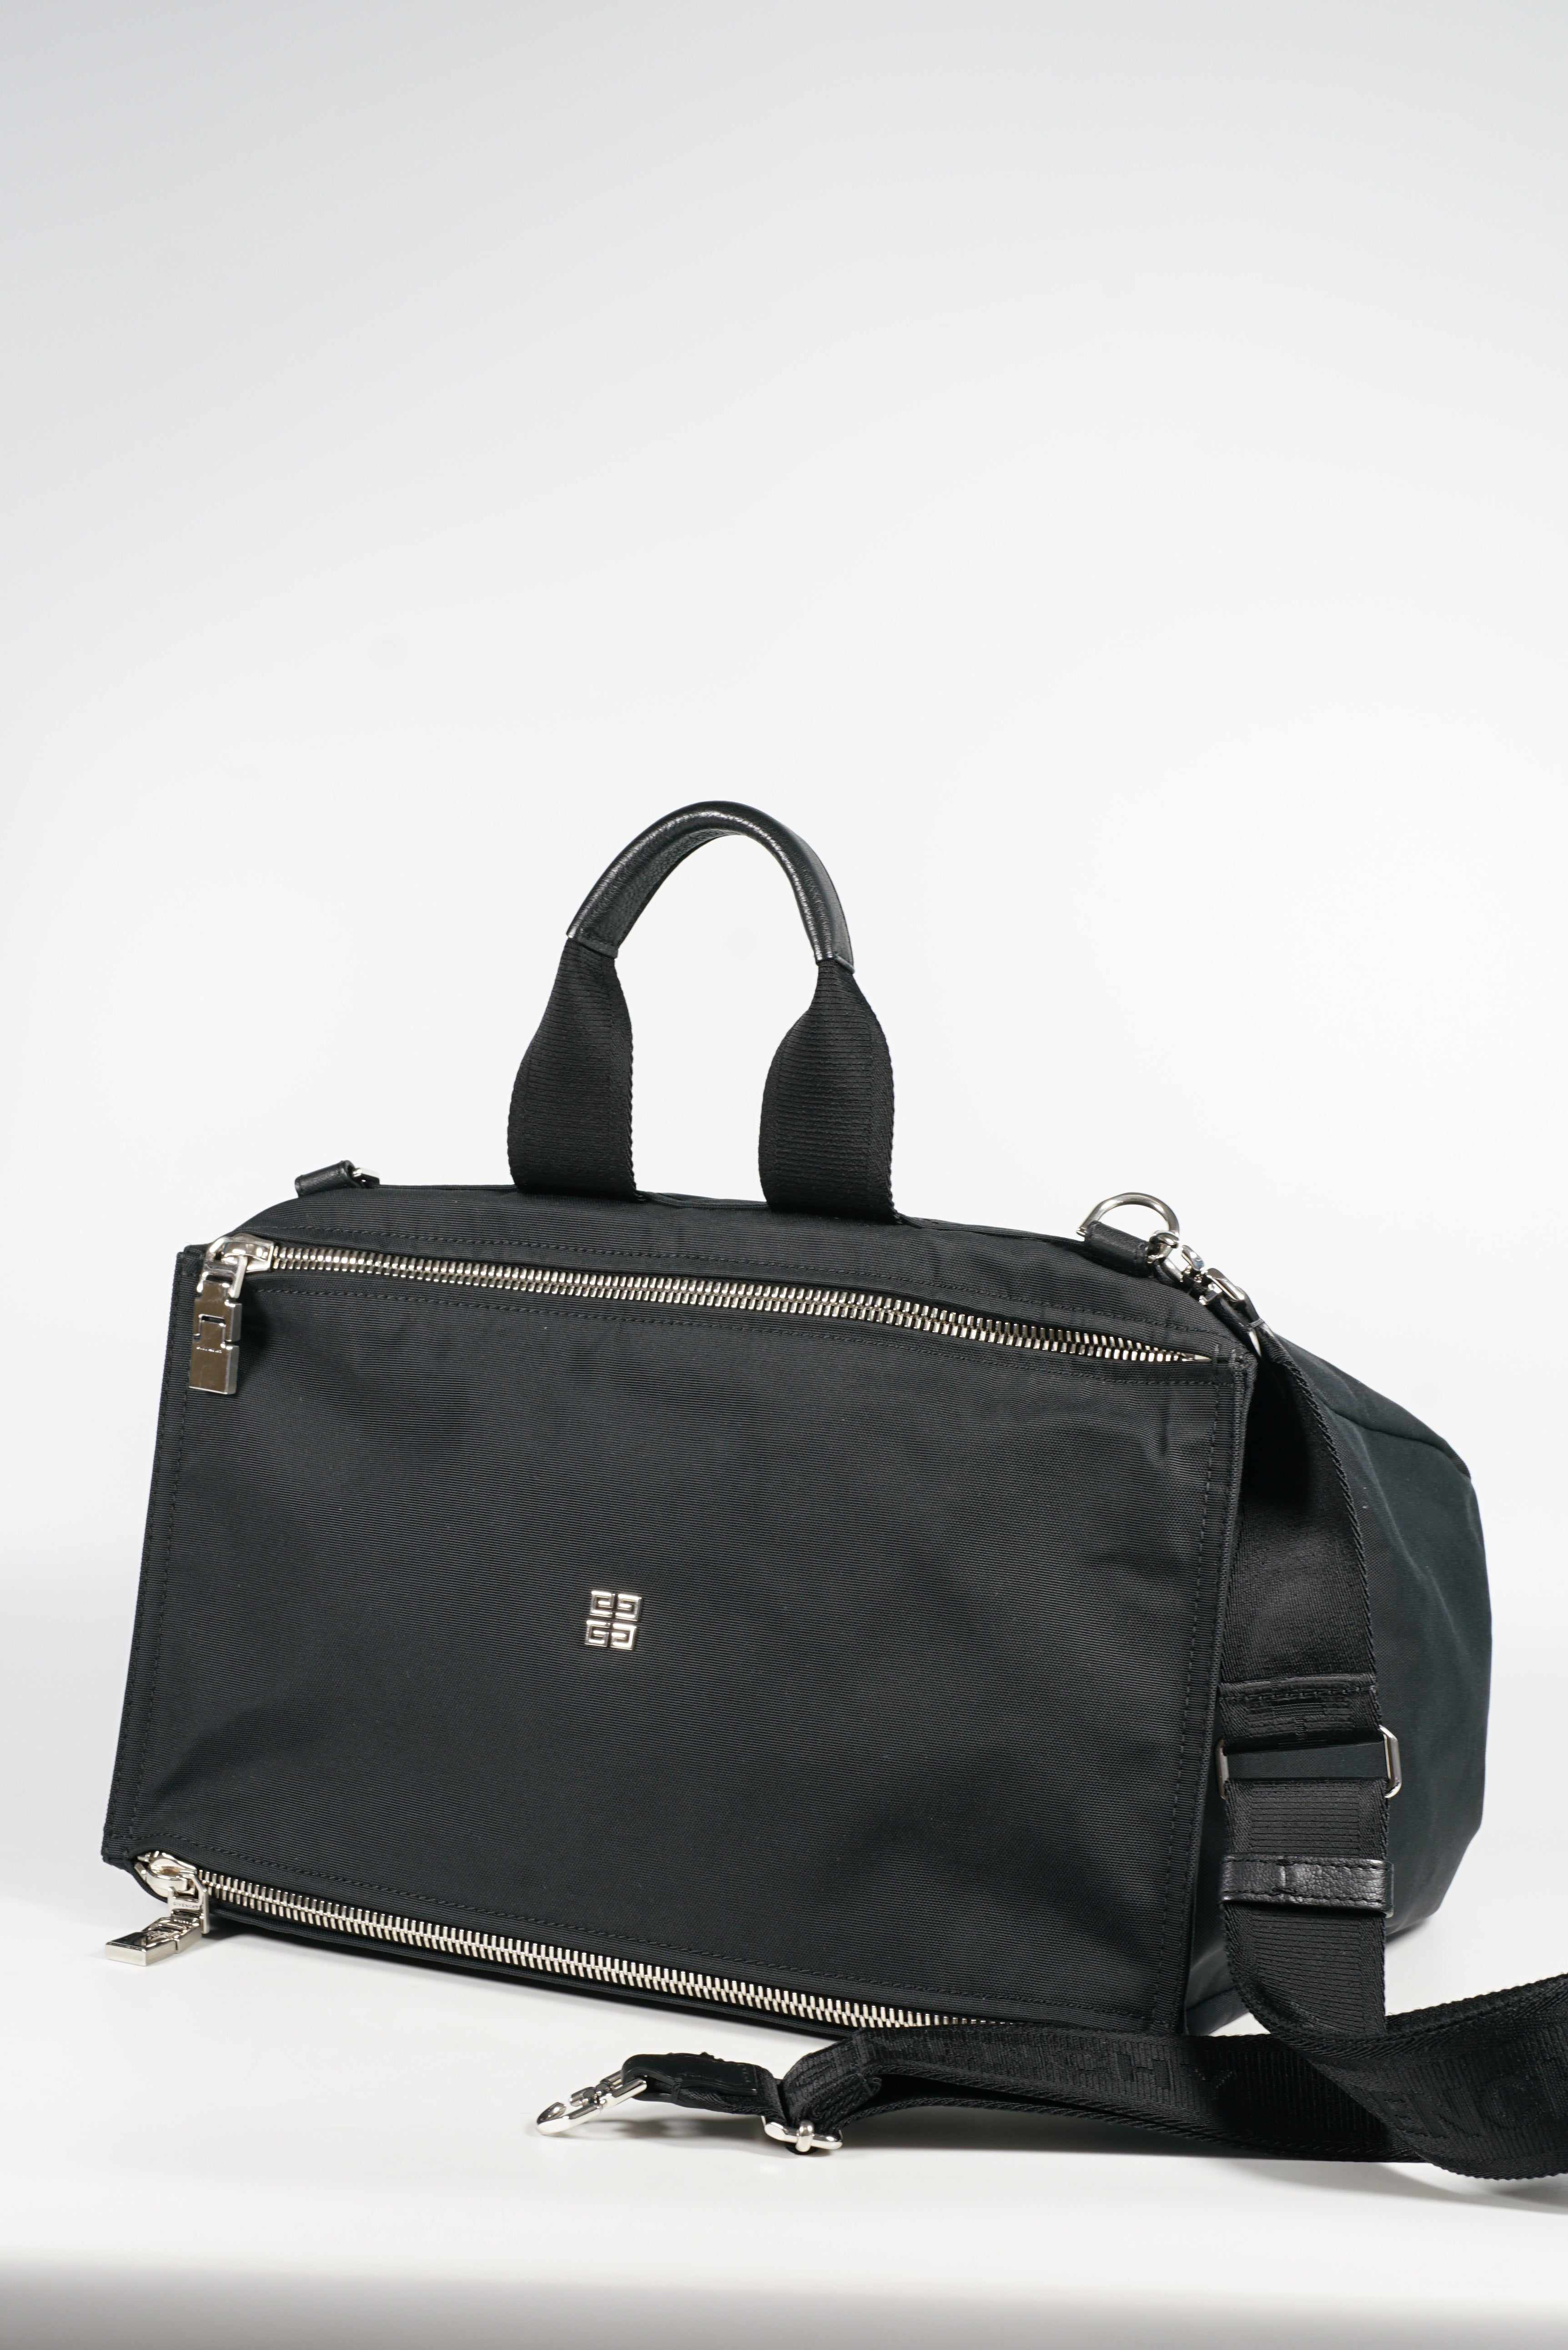 Givenchy Pandora Large in Black Nylon Body Bag